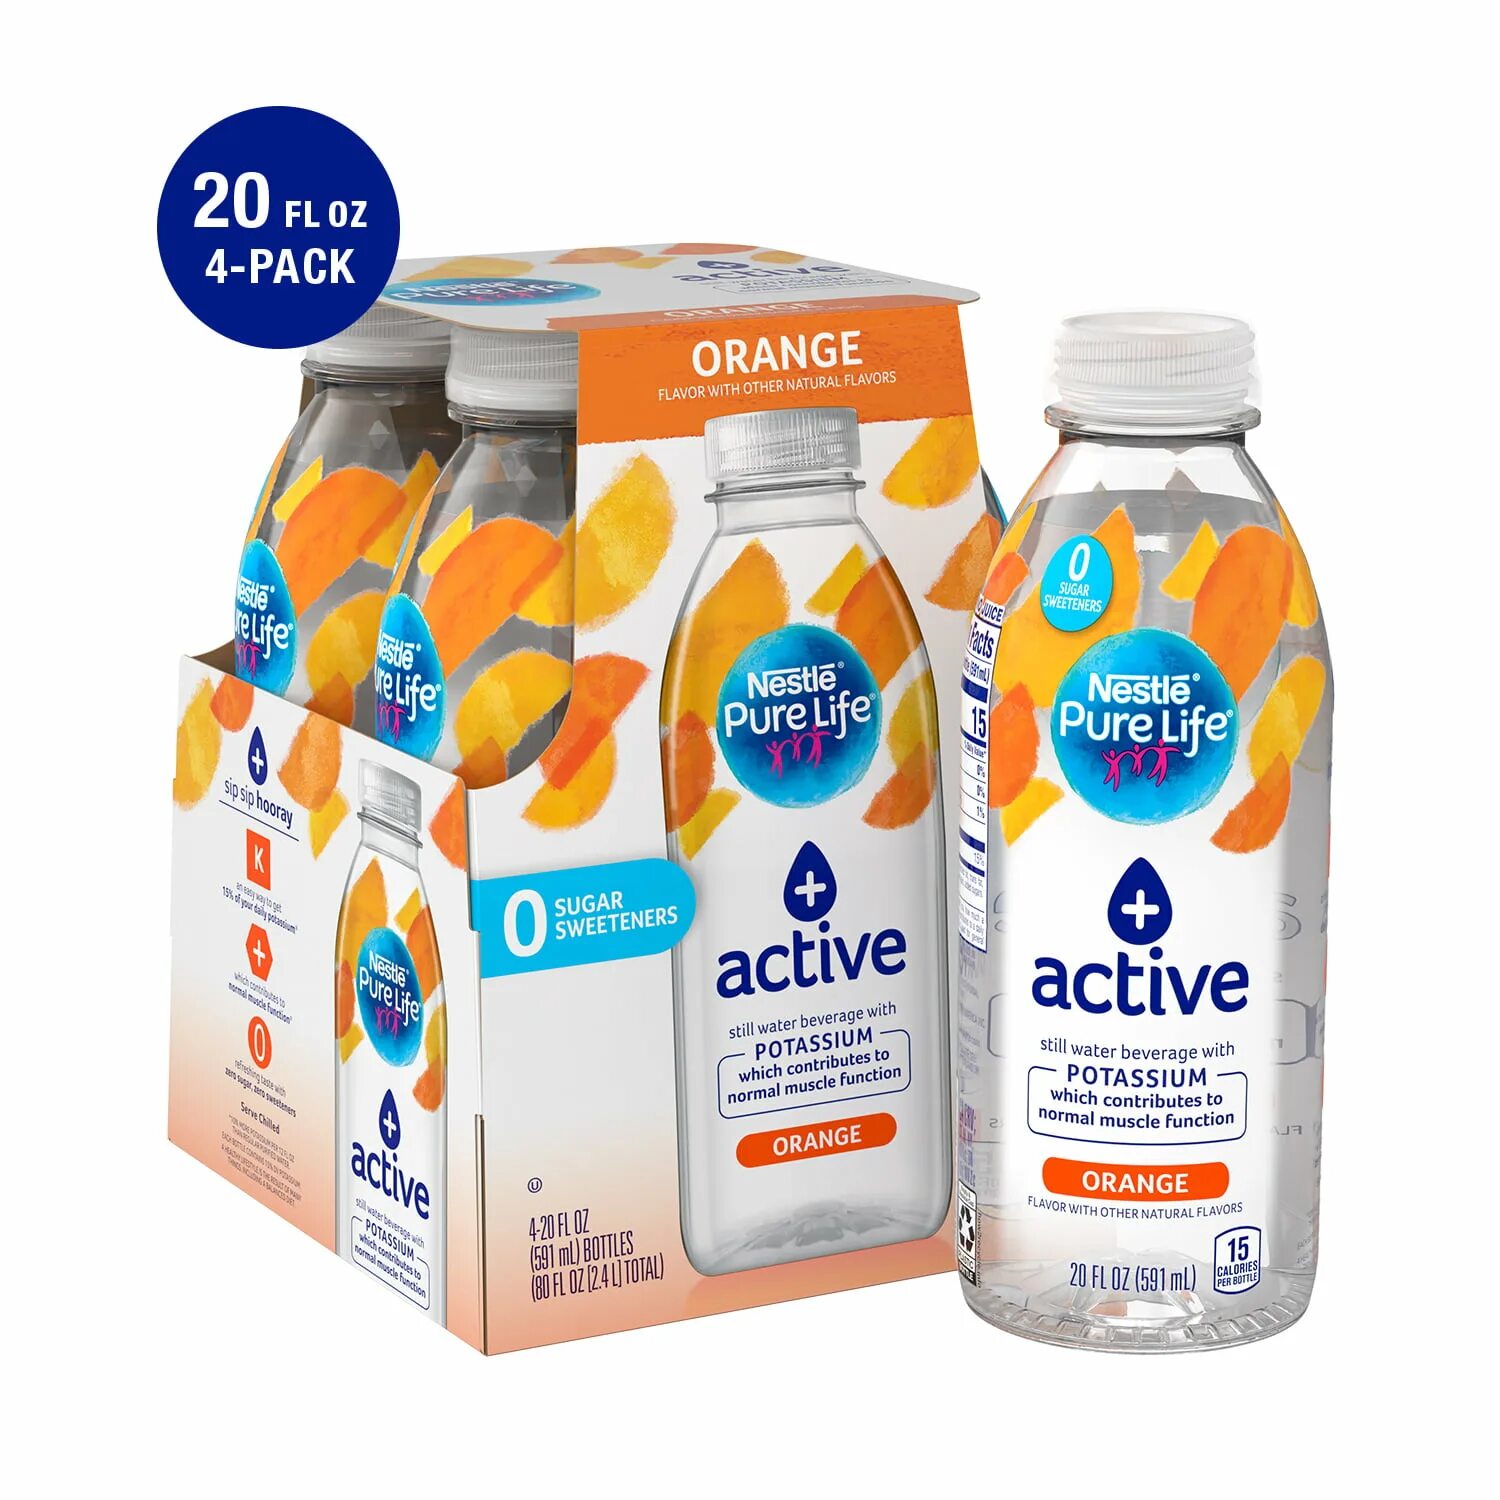 Active Life молочная. Nestle Pure Life Santal 0.5. Ortoniса Актив лайф s4000. Active Life Now. Life is active